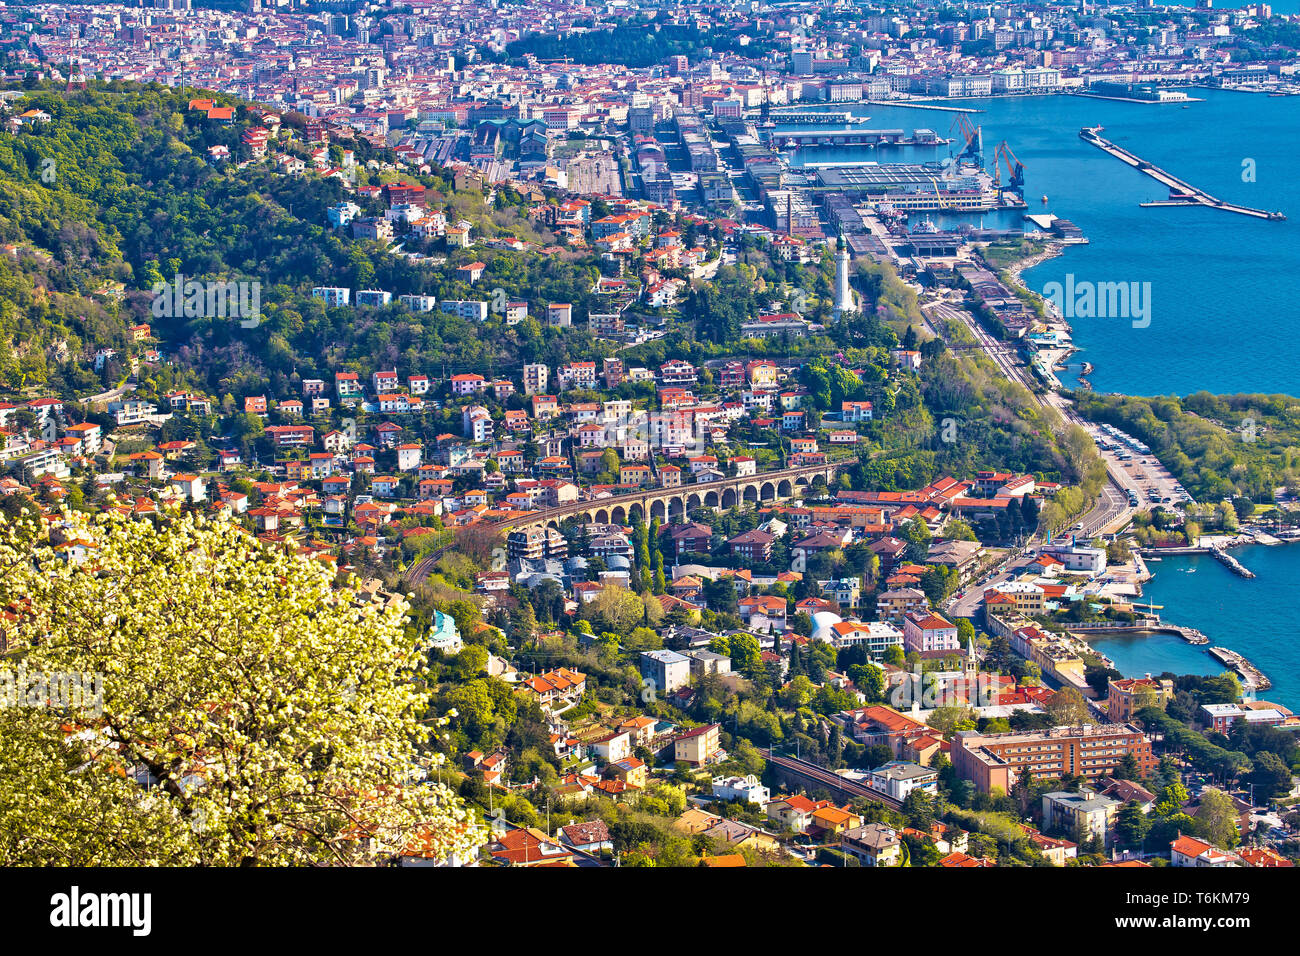 City of Trieste panoramic aerial view, Friuli Venezia Giulia region of Italy Stock Photo